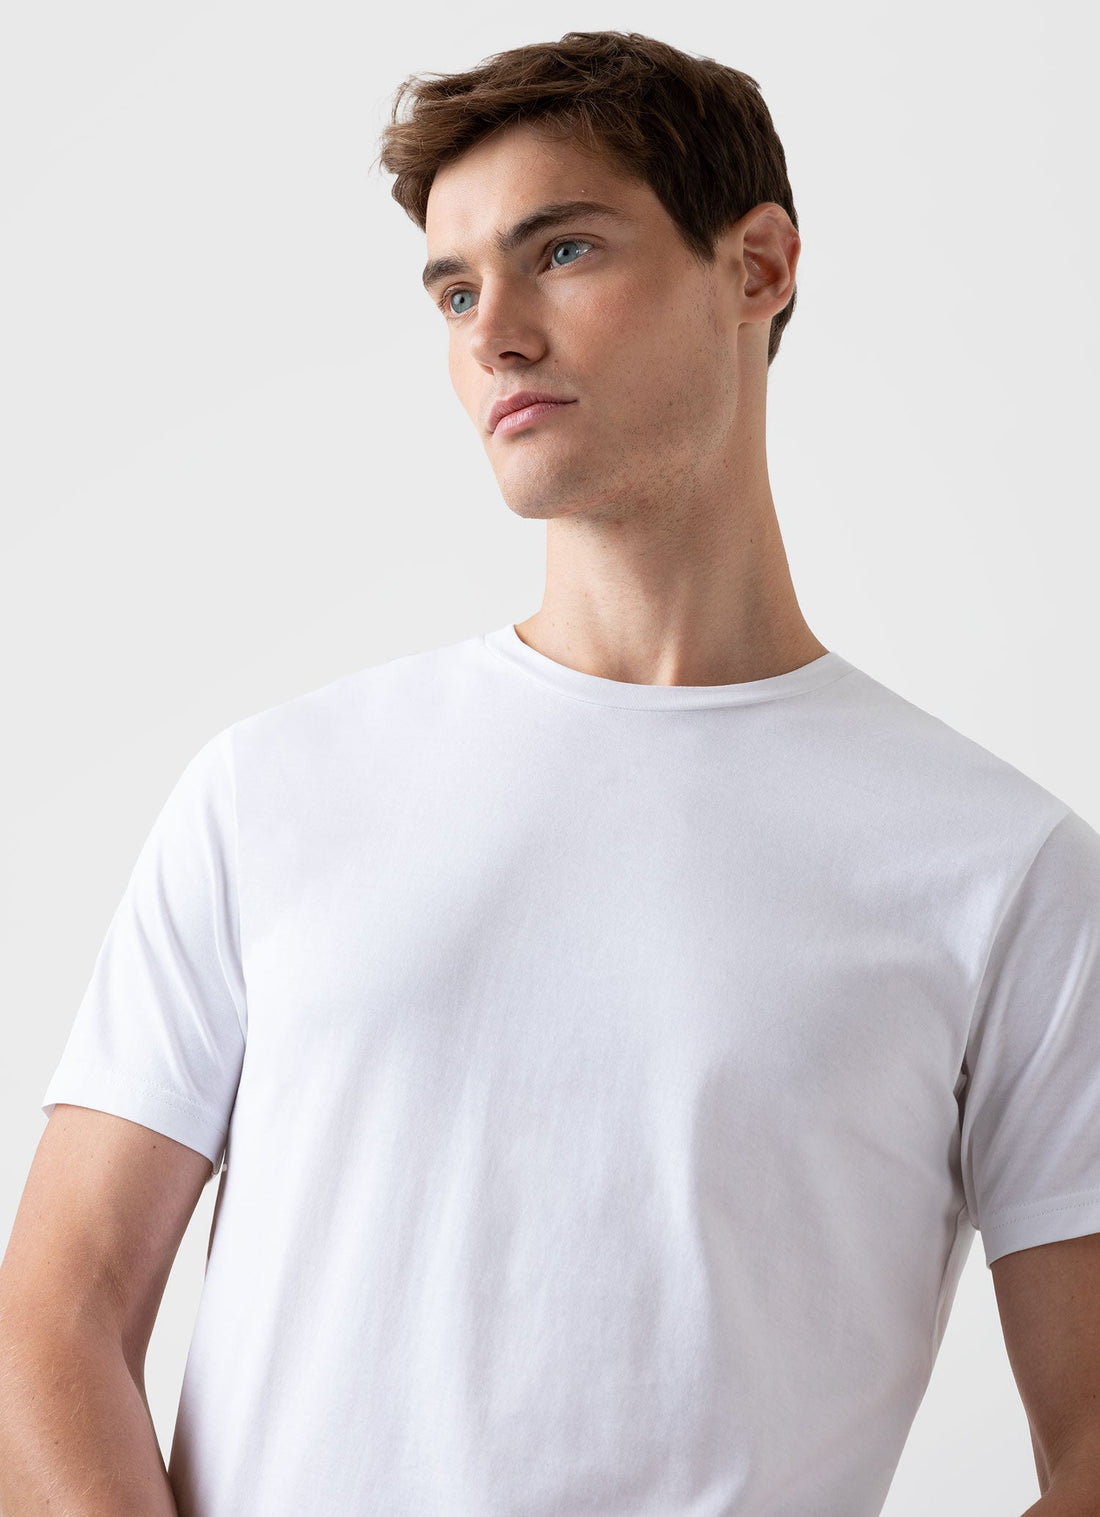 Men's Luxury T-shirts